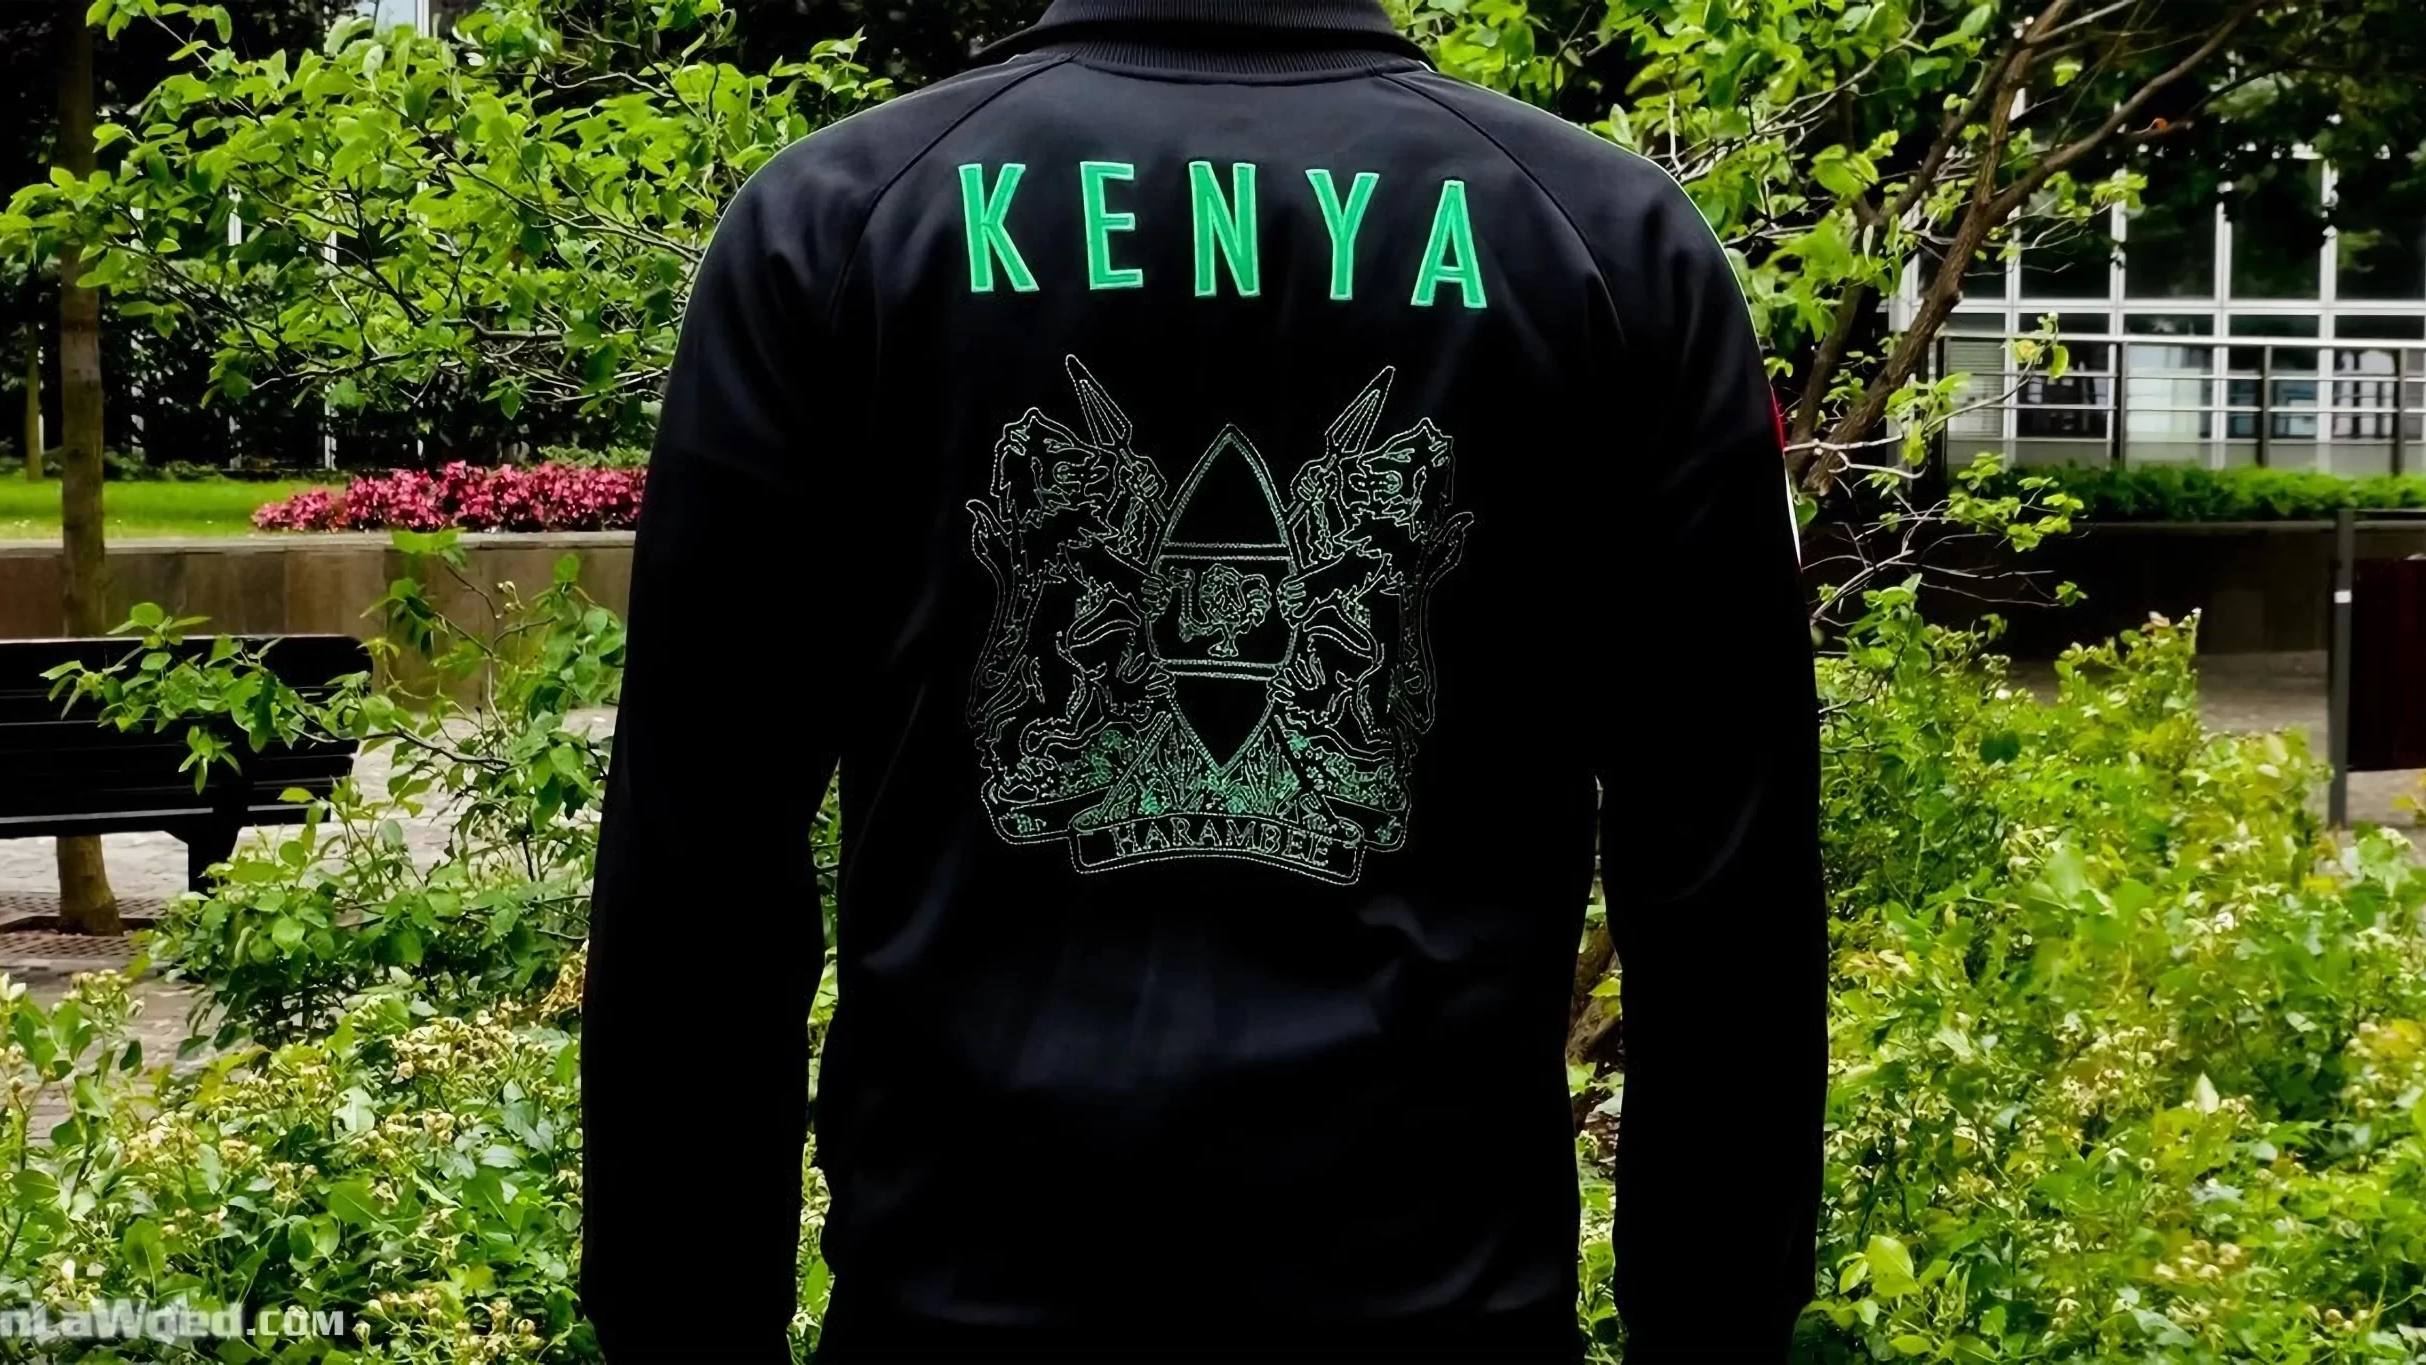 Men’s 2007 Kenya Harambee TT by Adidas Originals: Breakthrough (EnLawded.com file #lmcgk4pedesbatg8do)